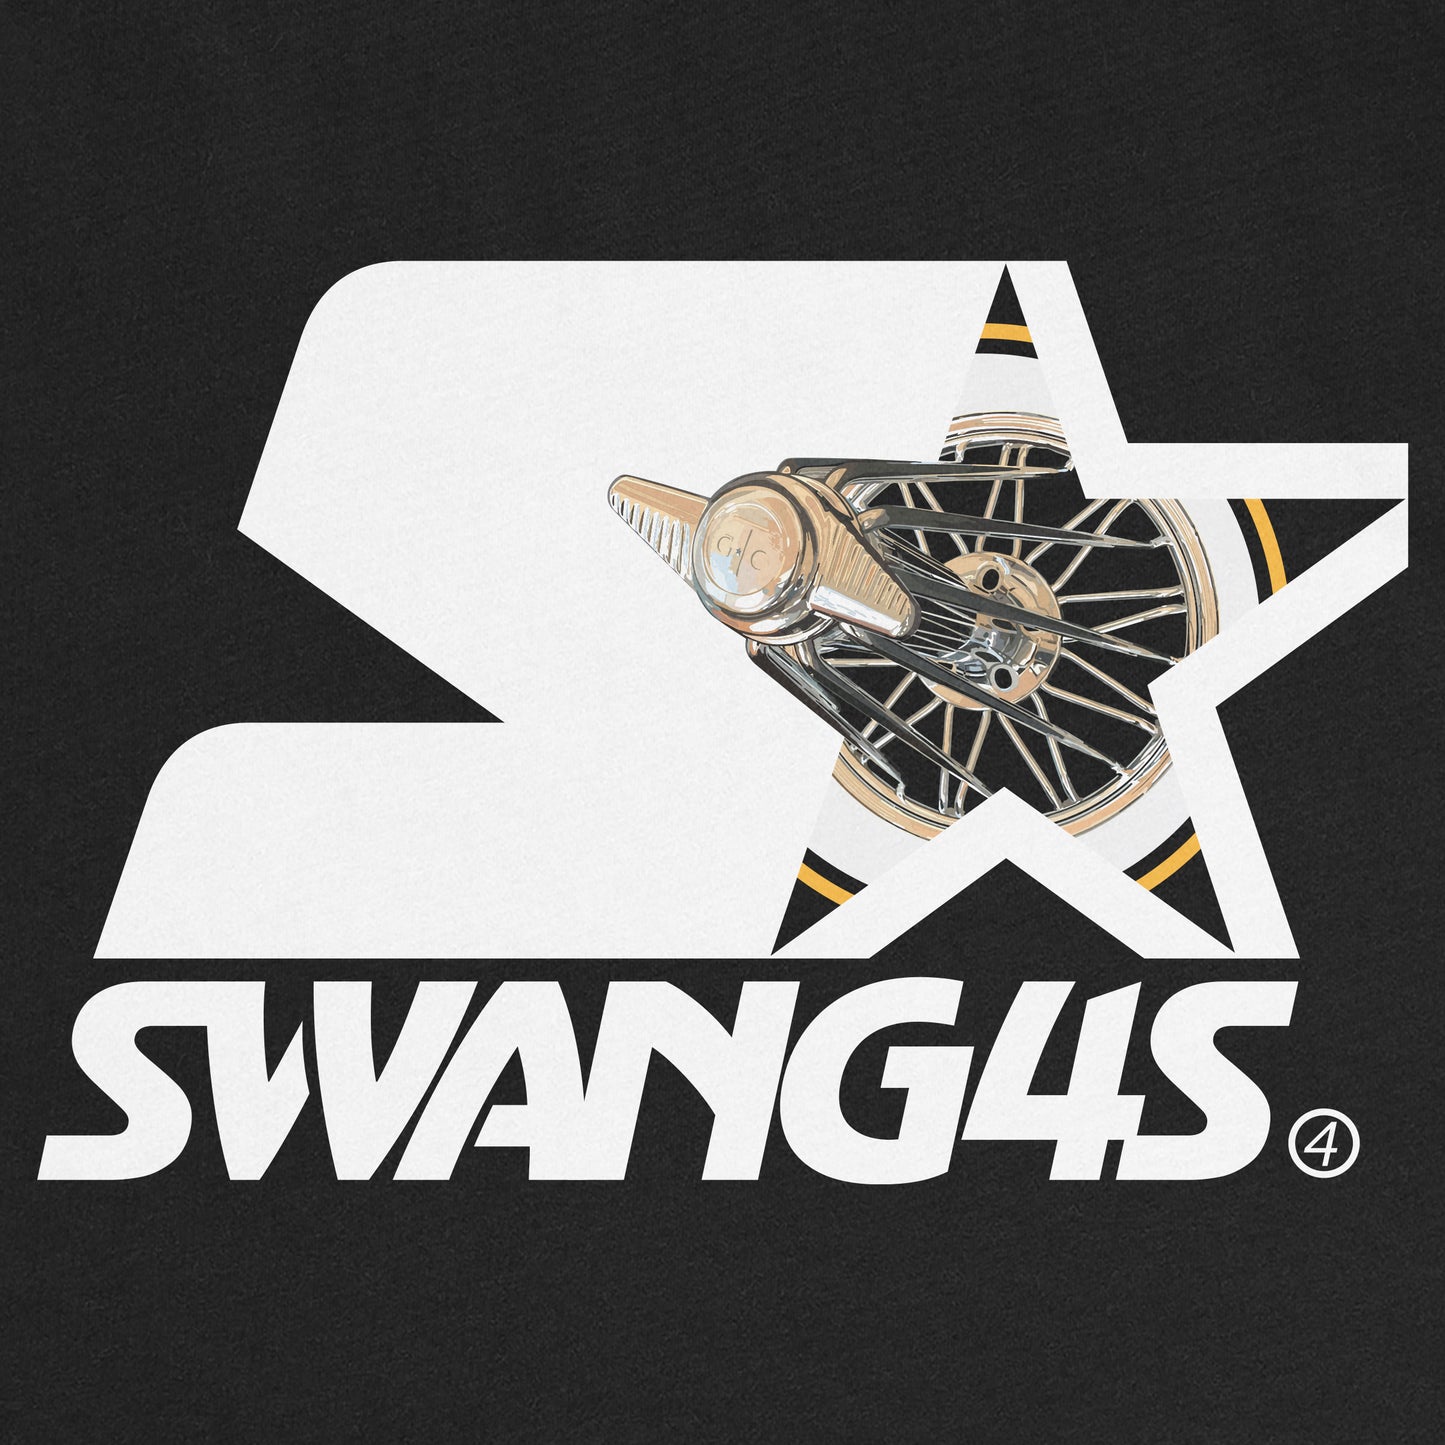 SWANG4S Star T-Shirt